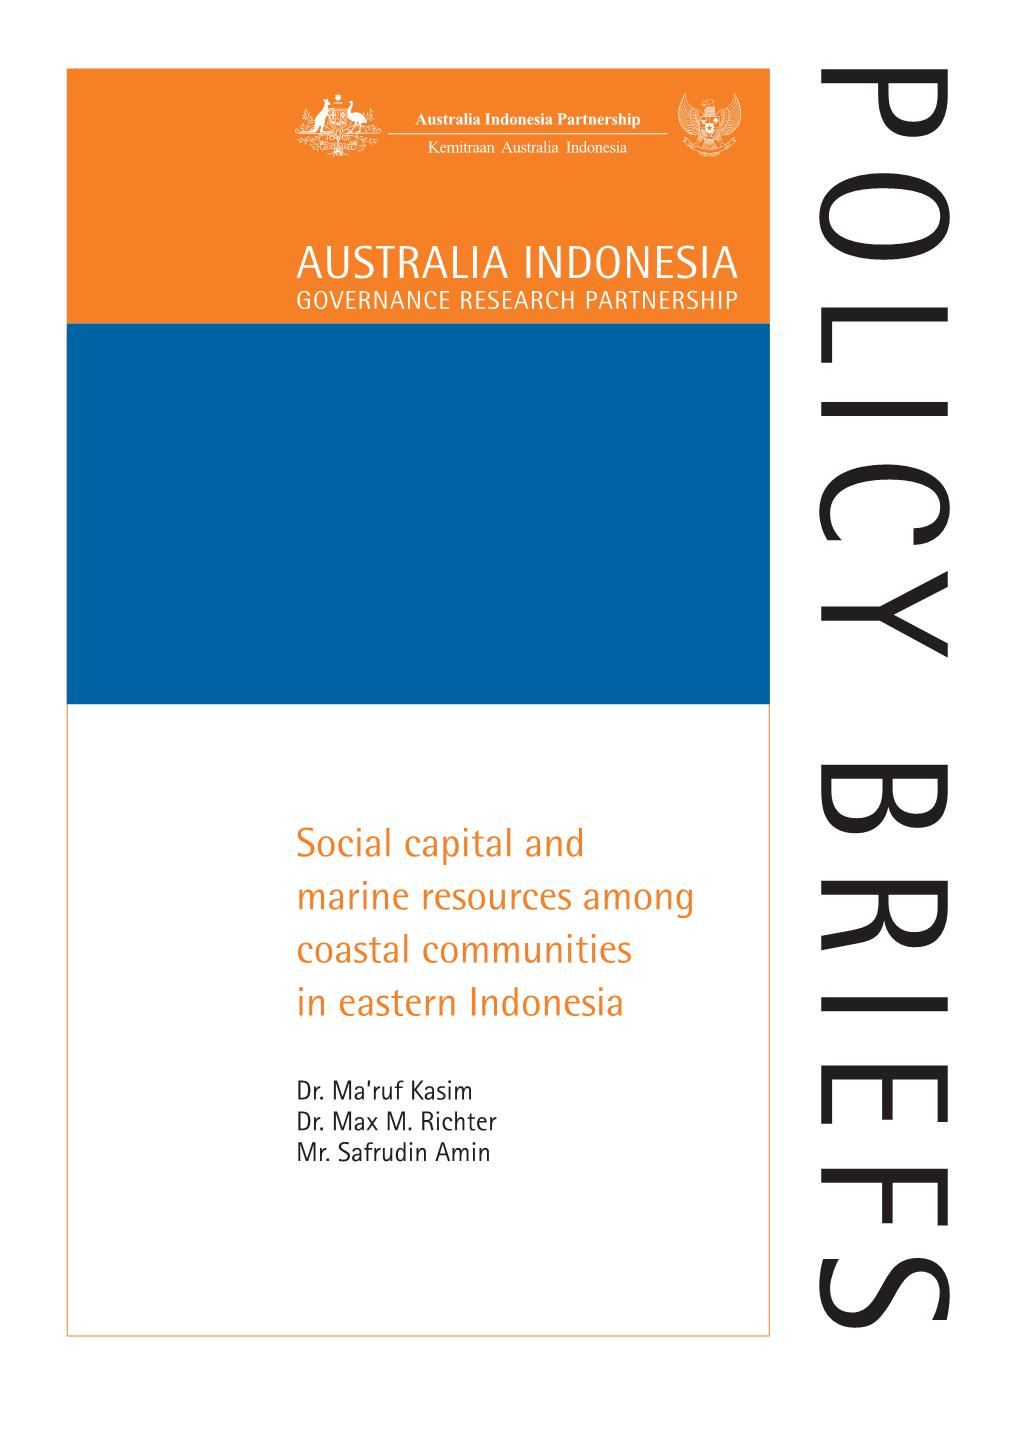 Australia Indonesia Australia Research Partnership Governance